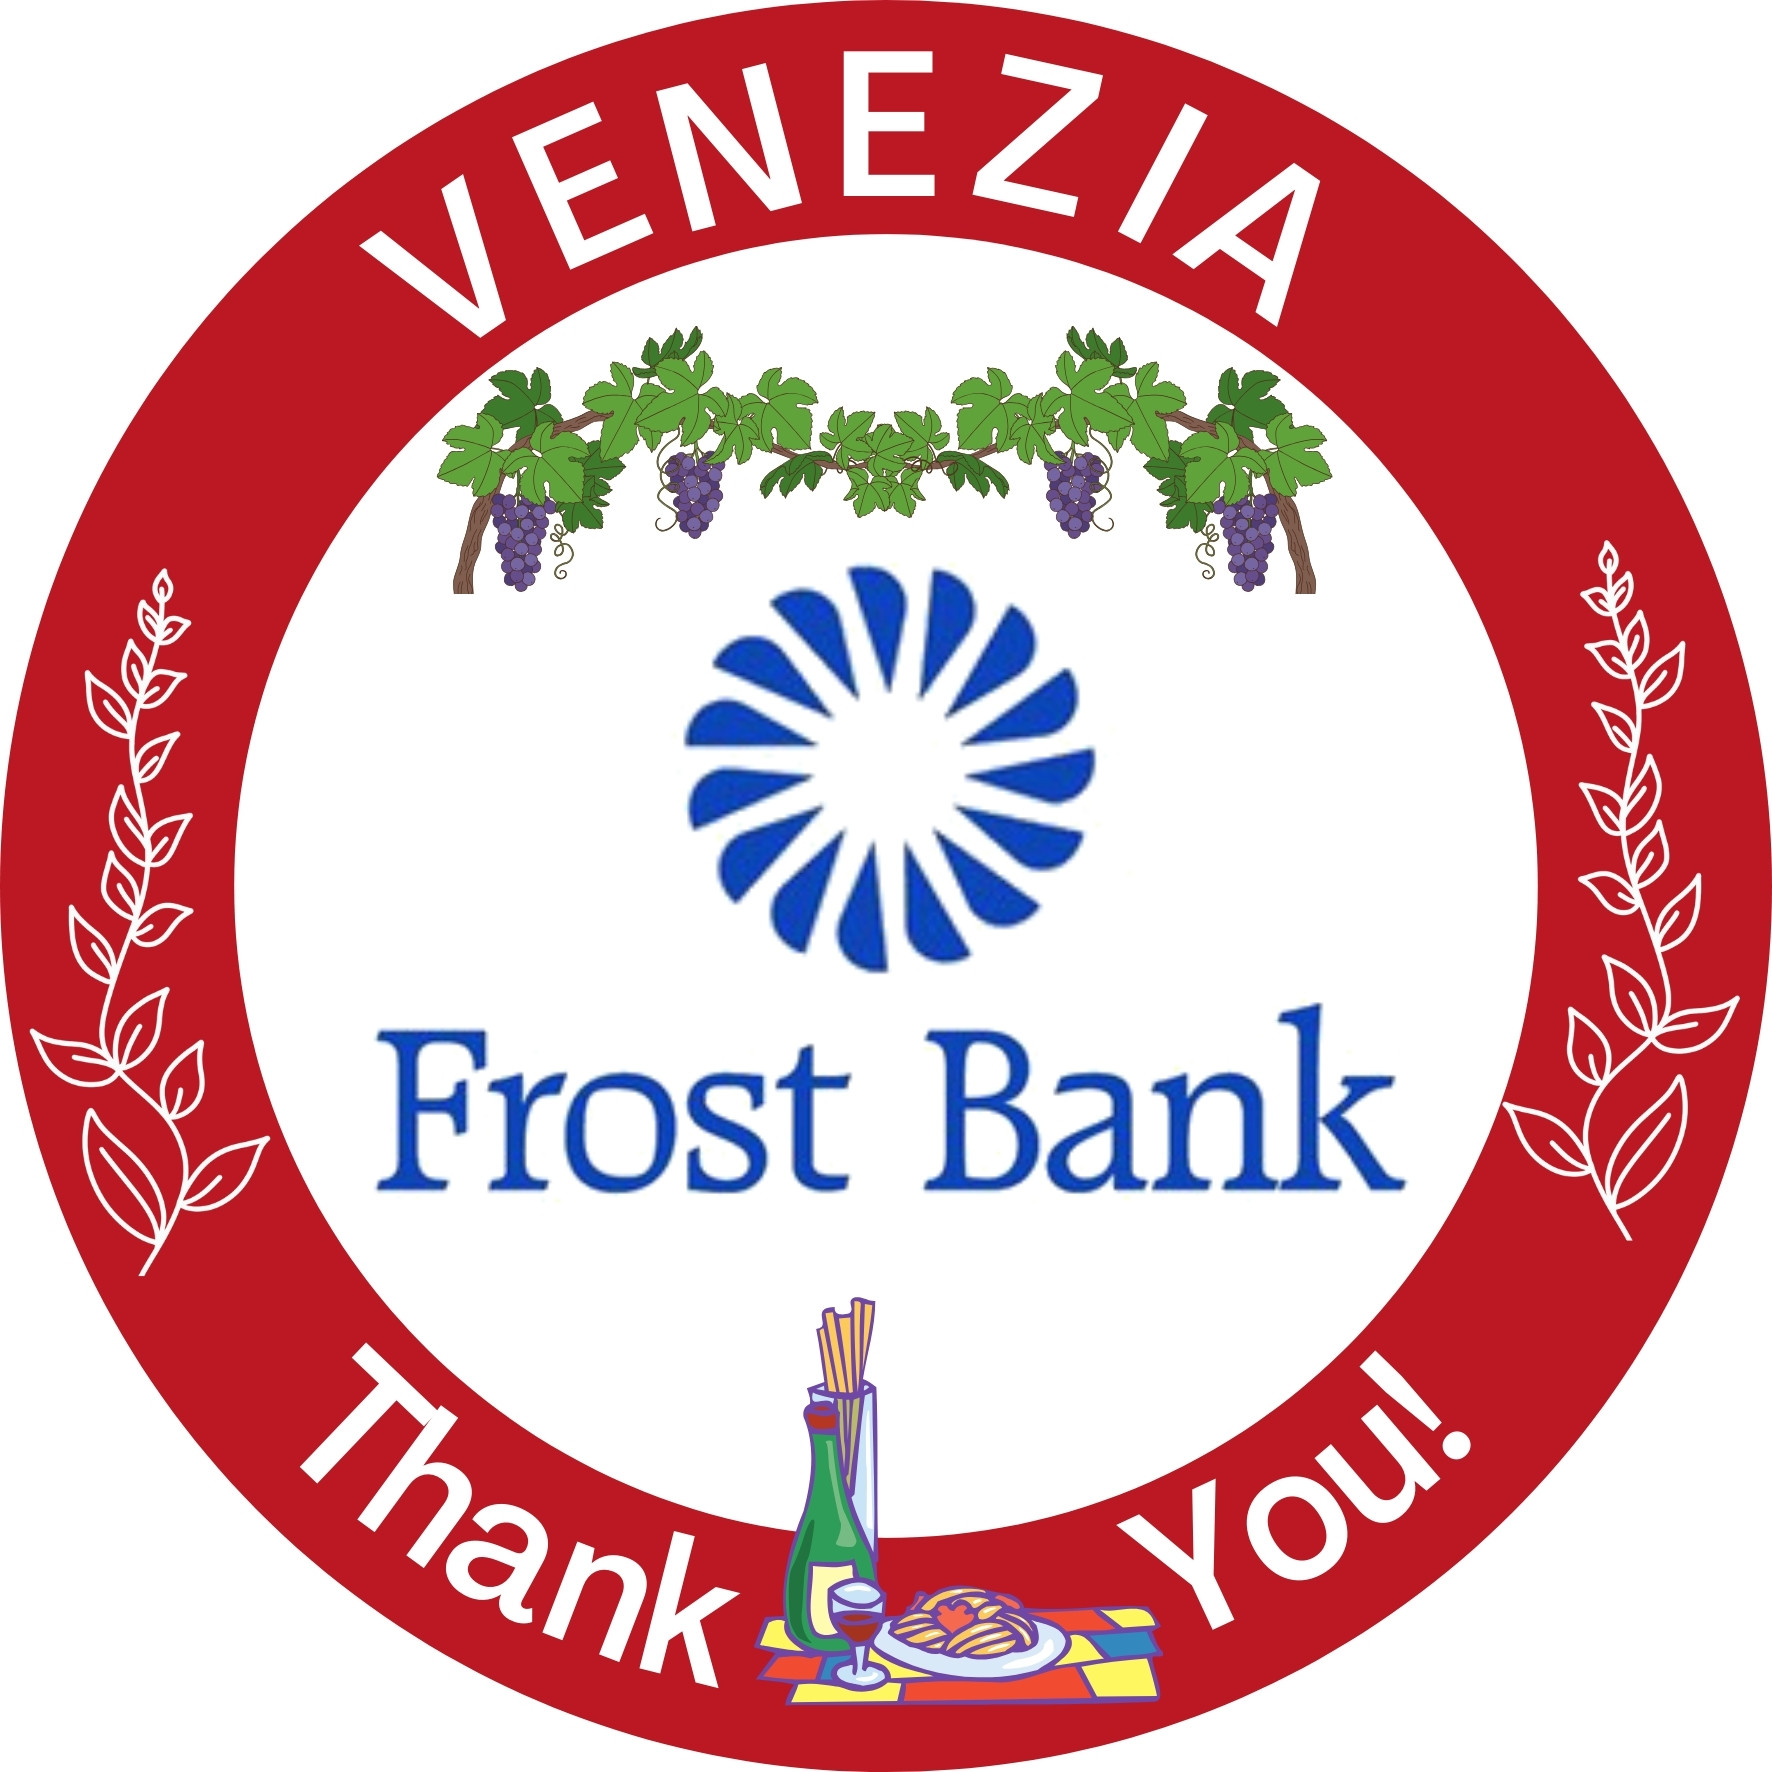 Frost Bank Sponsorship